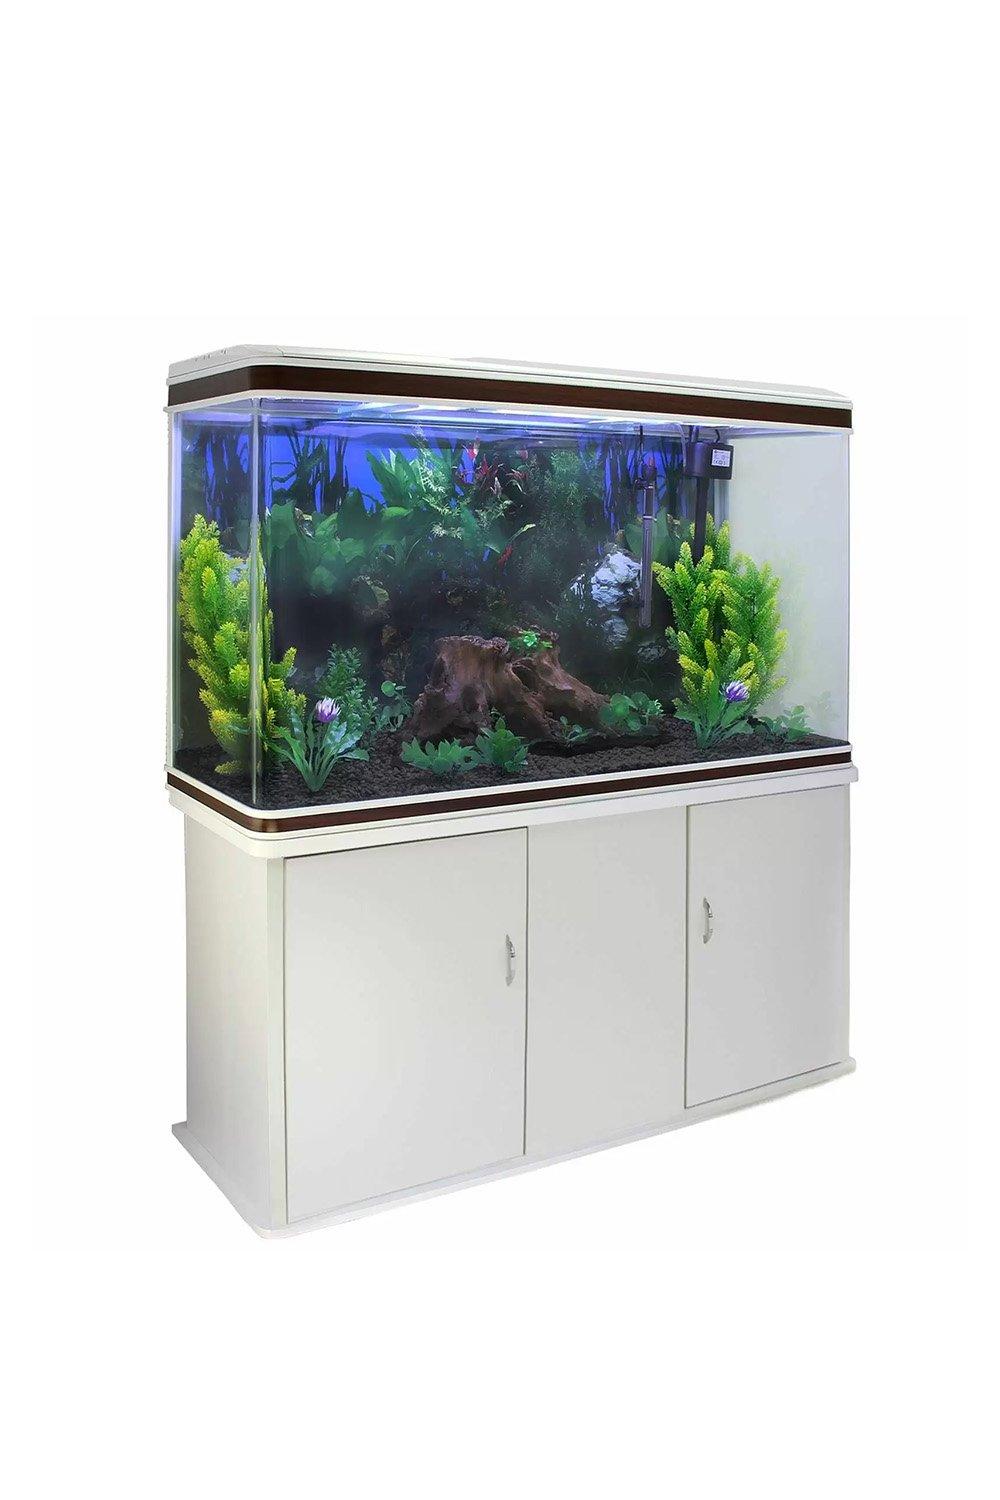 Aquarium Fish Tank & Cabinet with Complete Starter Kit - White Tank & Black Gravel